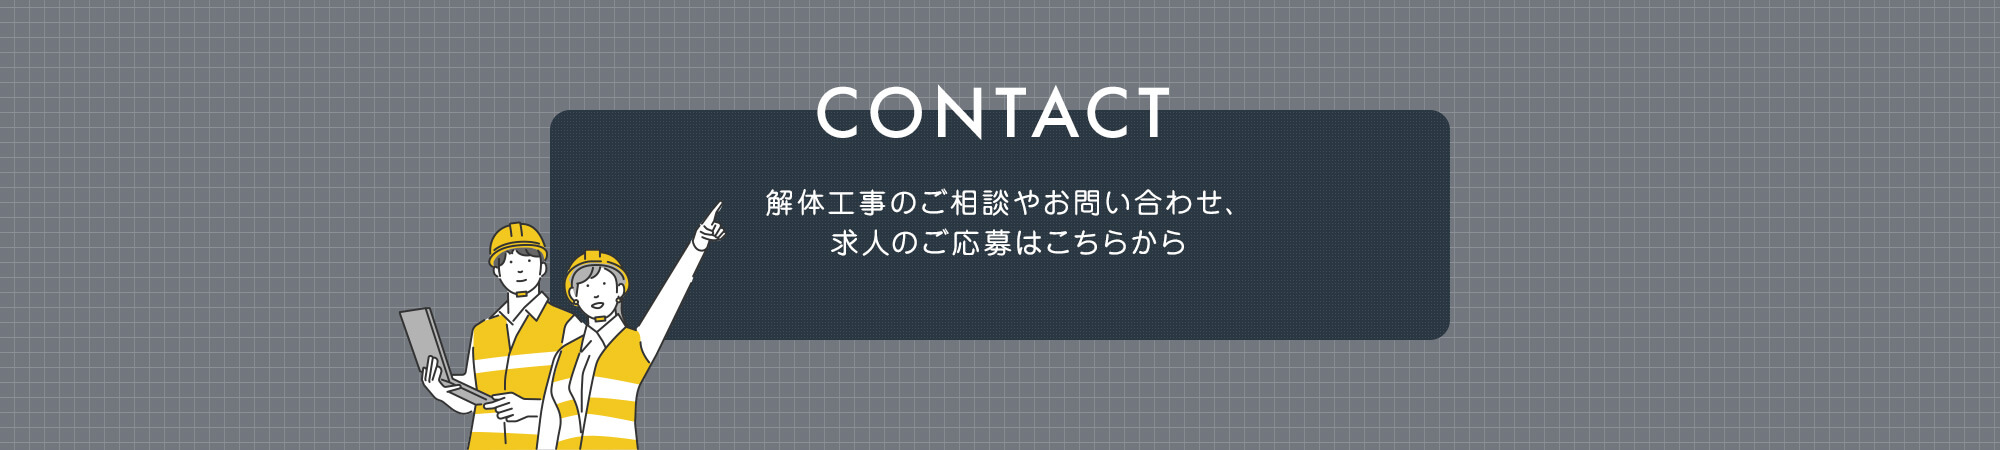 banner_contact_bg